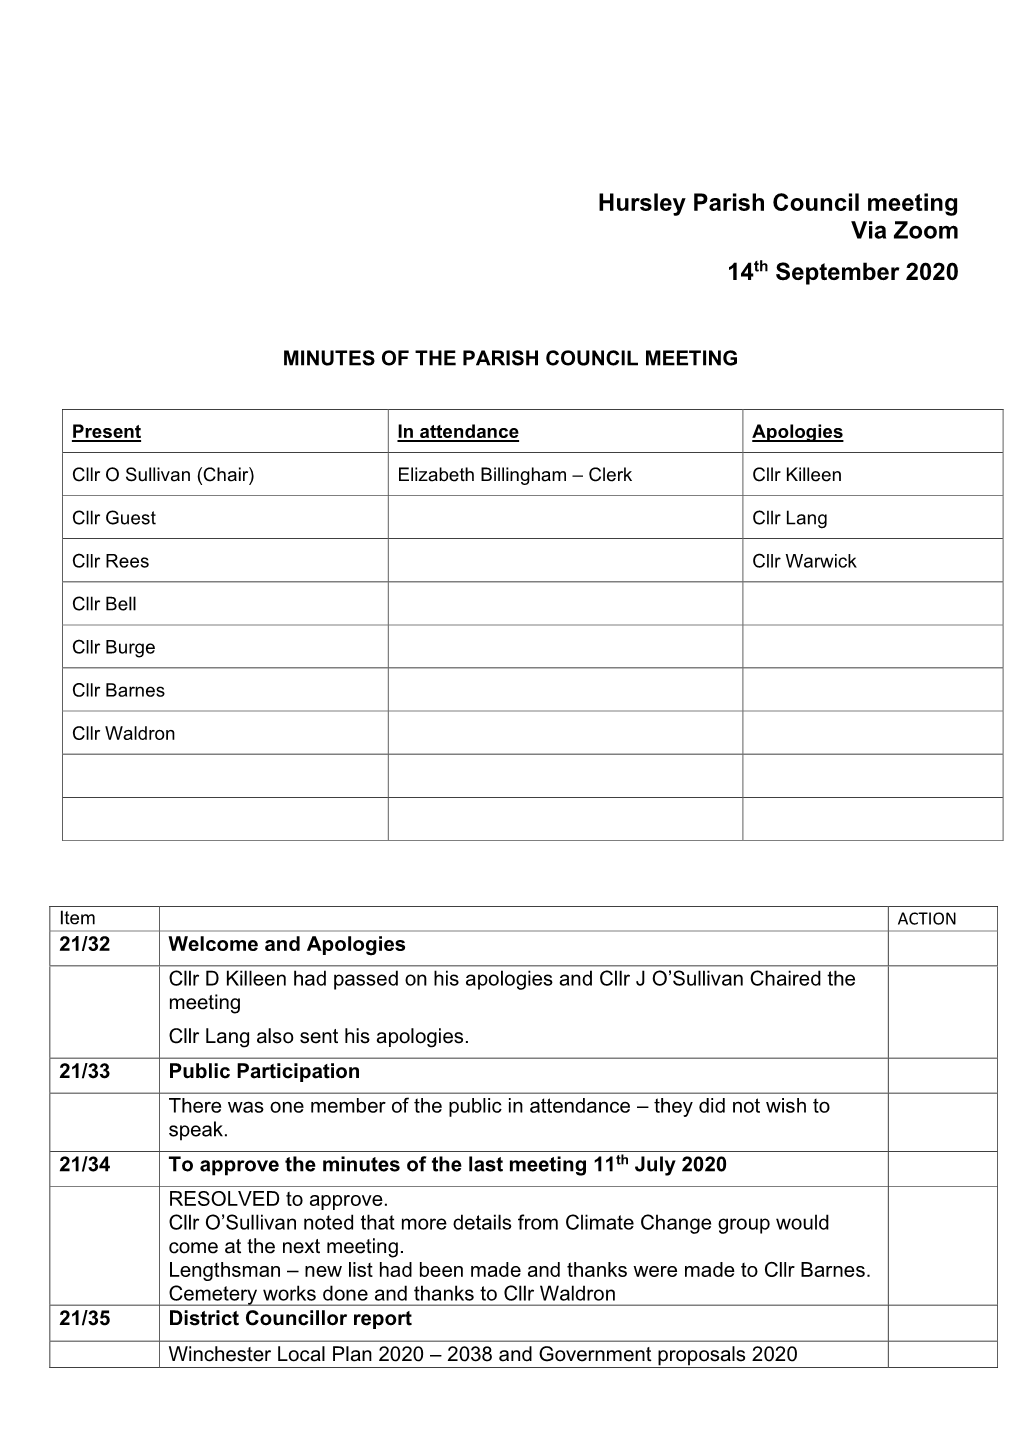 Hursley Parish Council Meeting Via Zoom 14Th September 2020